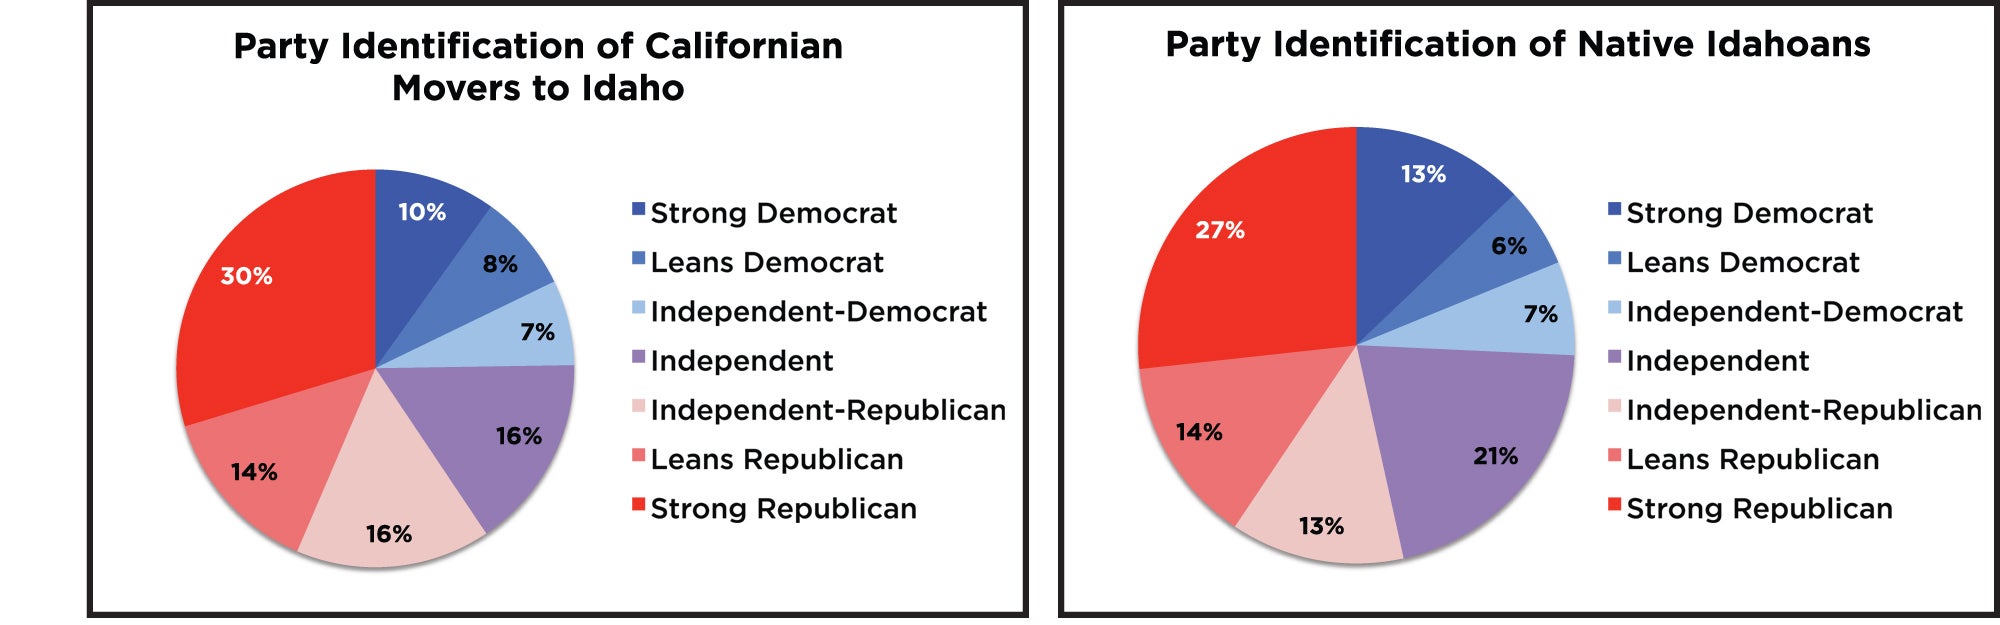 Party identification of Californians vs Native Idahoans, pie charts